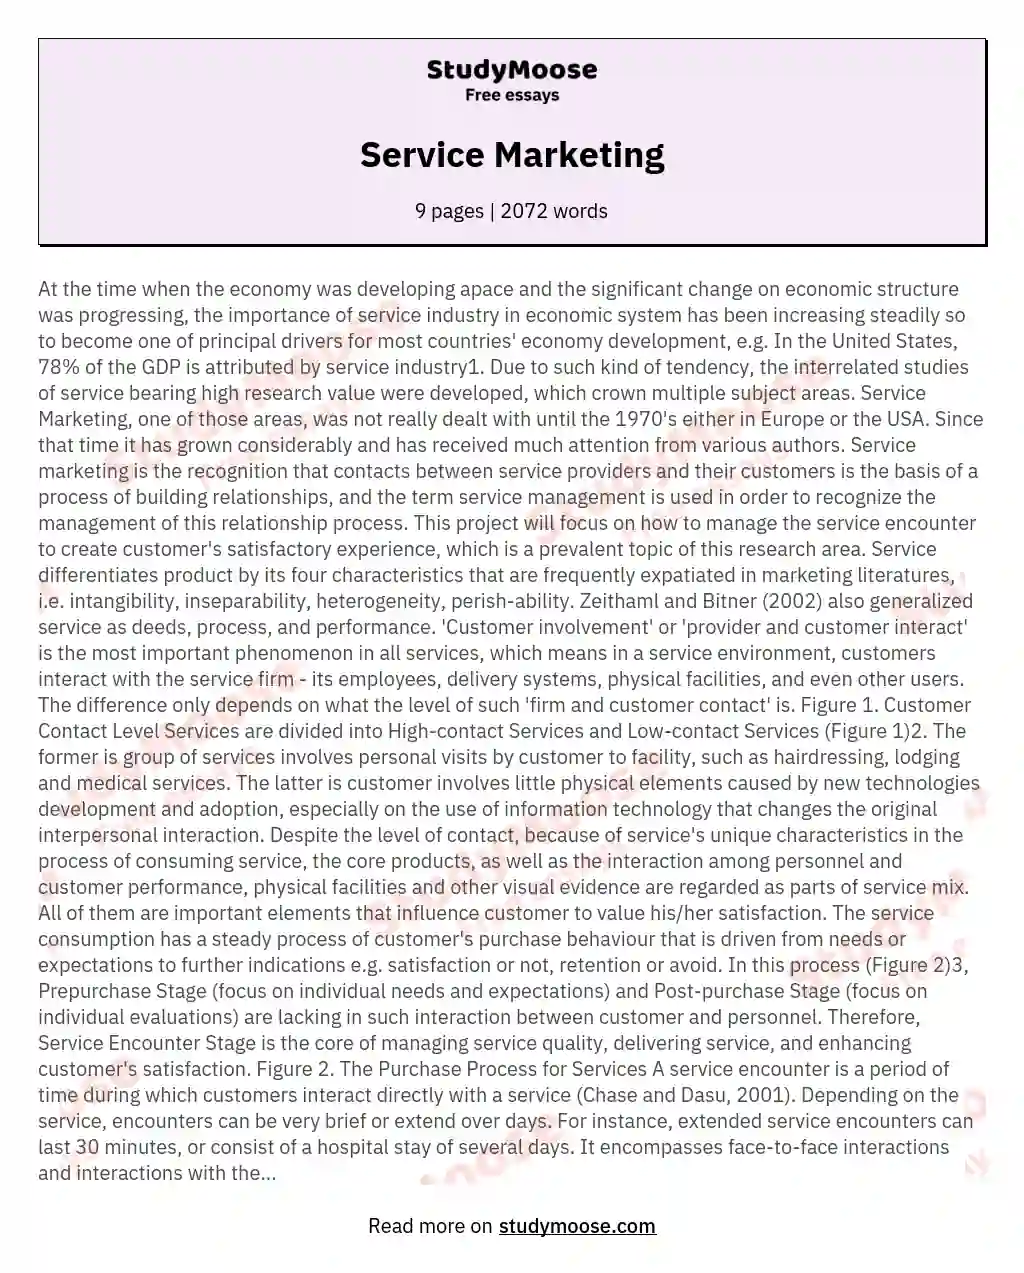 Service Marketing essay